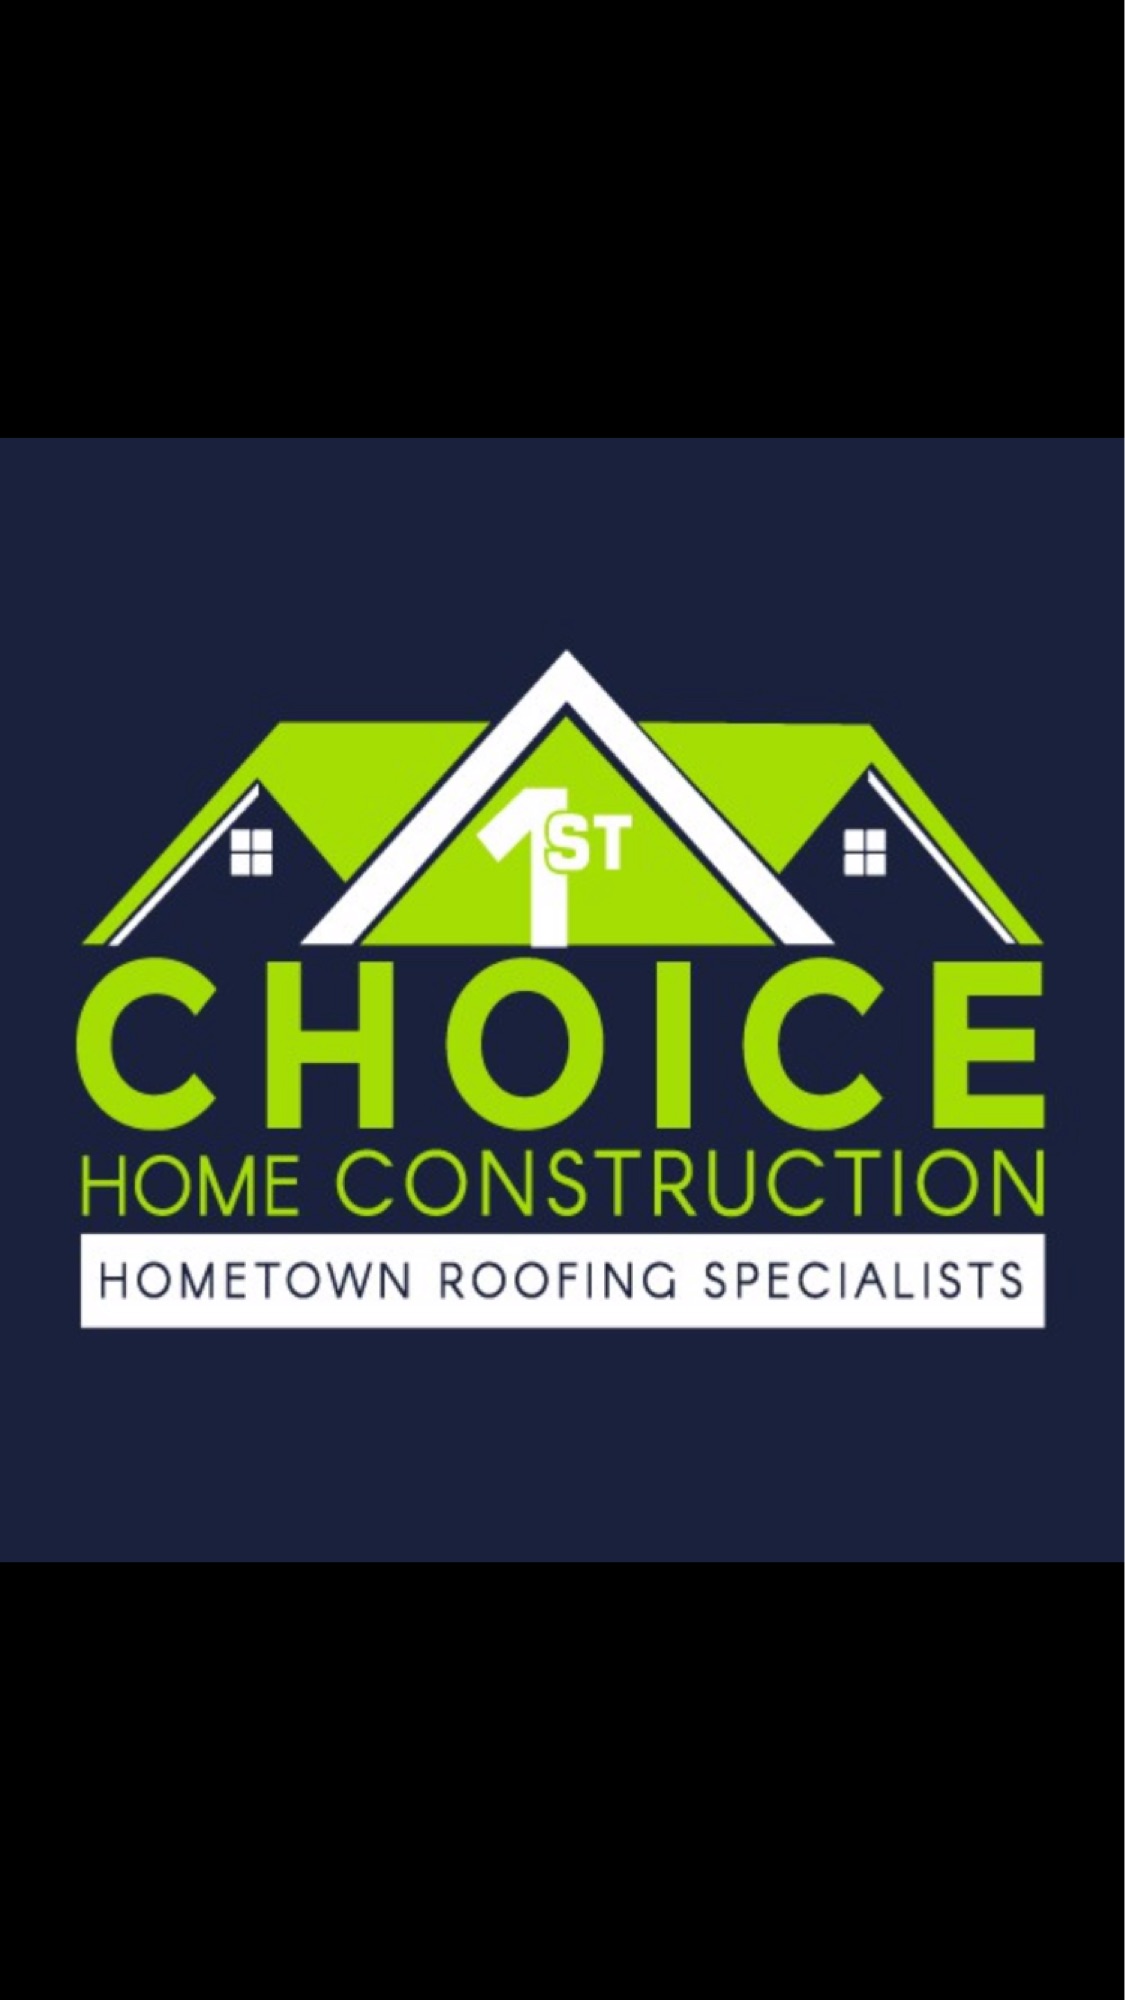 1st Choice Home Construction Co. Logo